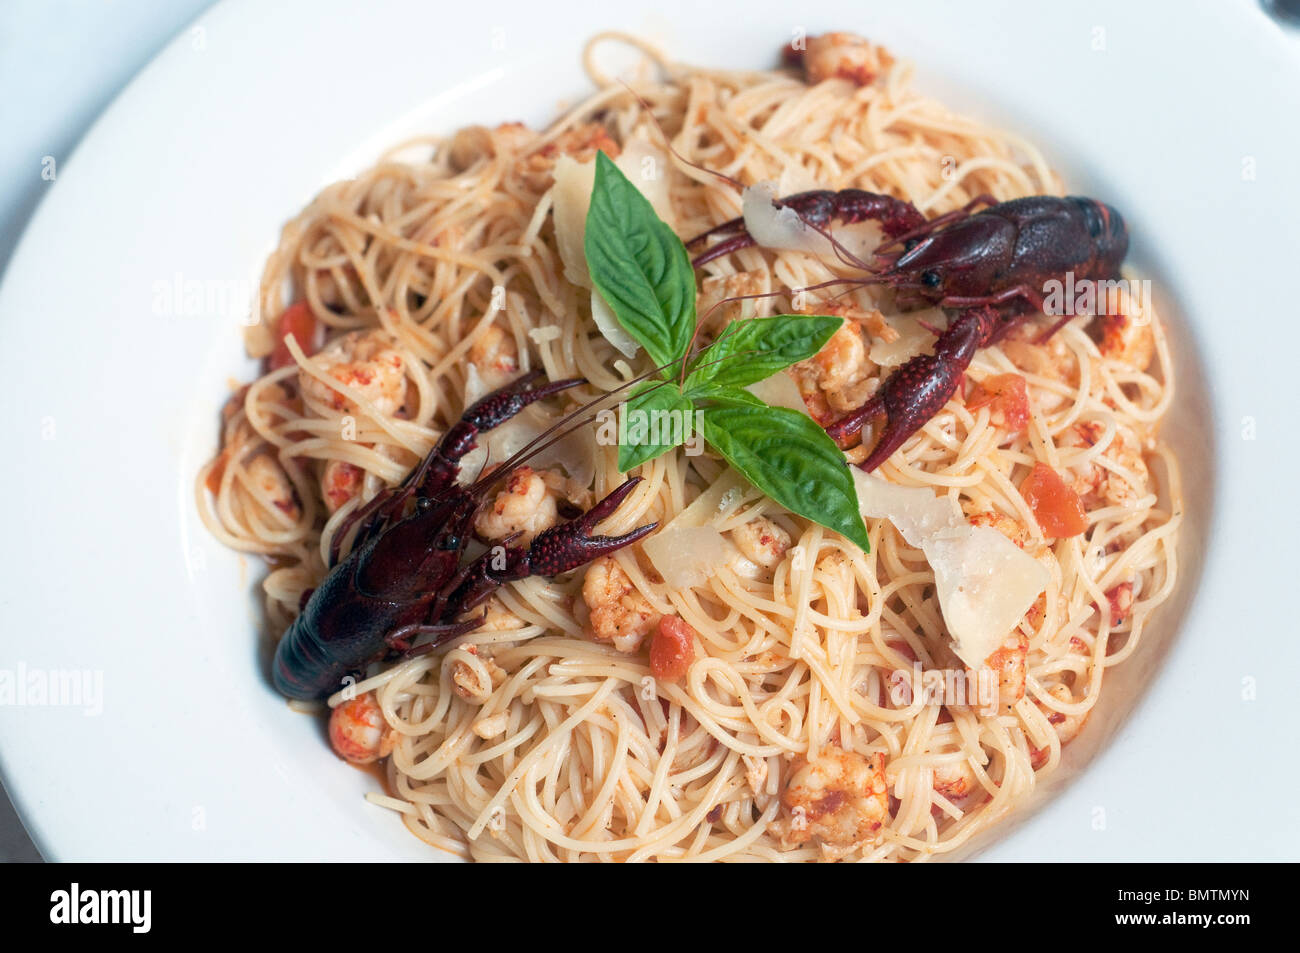 Crawfish Pomodoro pasta - Louisiana crayfish tails, tomatoes, fresh basil and garlic tossed with capellini. A Cajun recipe. Stock Photo